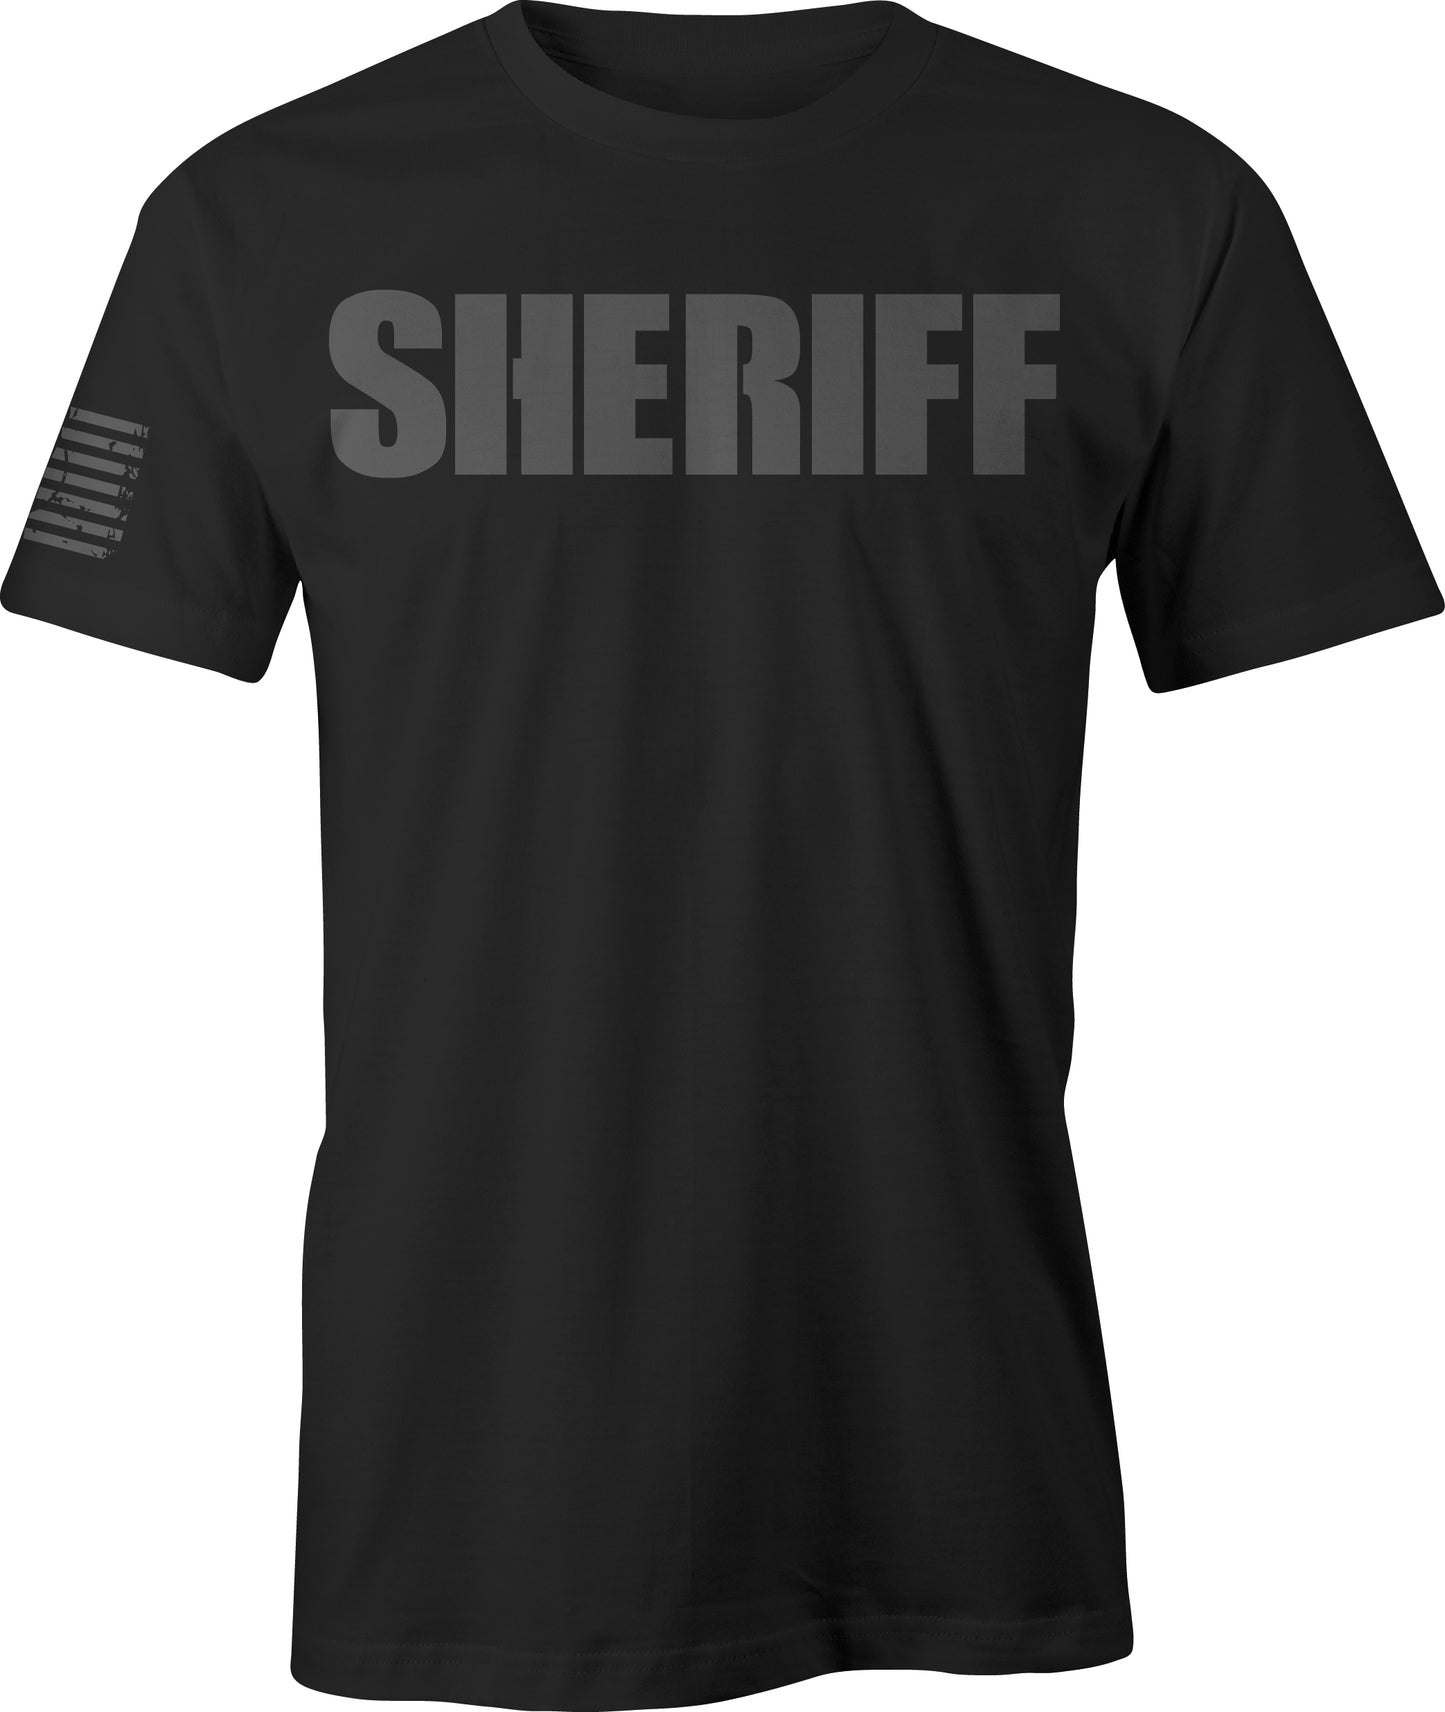 SHERIFF TEE